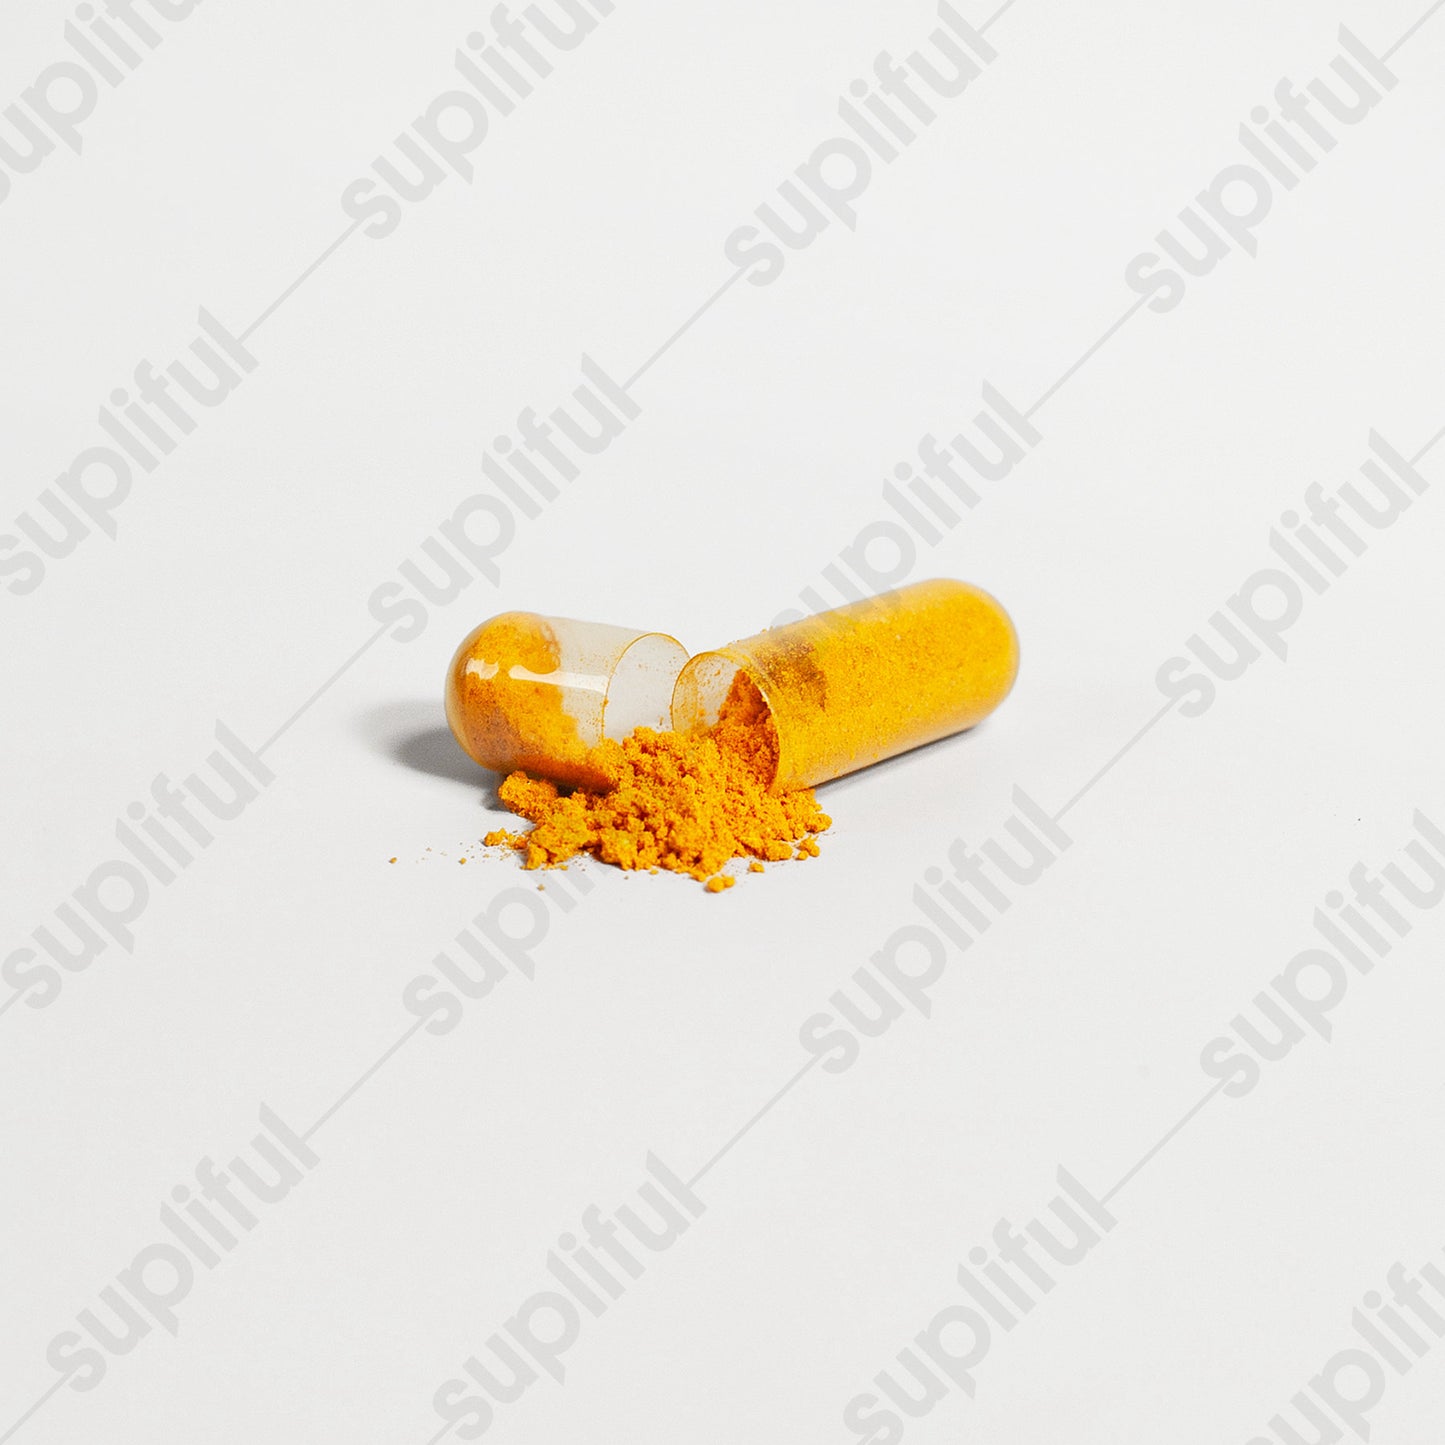 Dawg Pound Platinum Turmeric Supplement Capsules - Broken Capsules Showing Inner Content